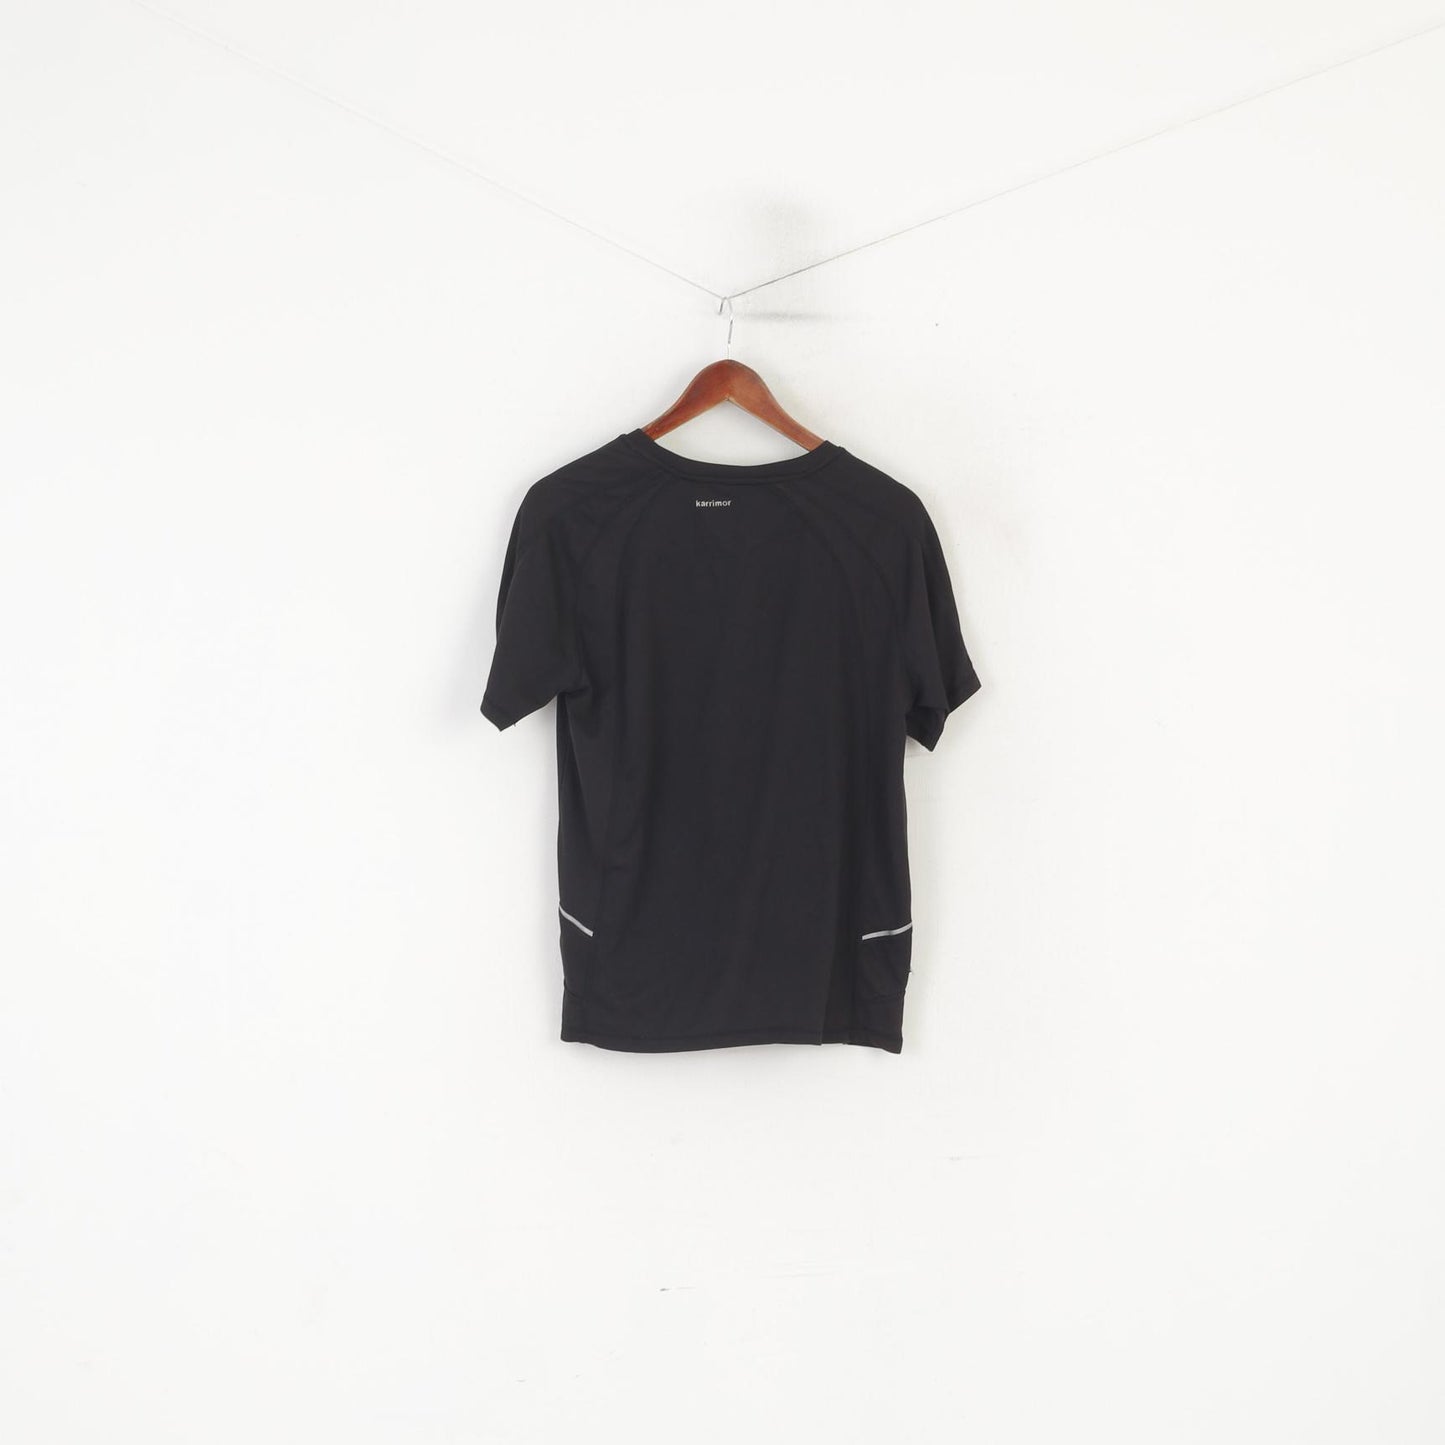 Karrmior Men S Shirt Black Running Activewear Reflective Sport Jersey Top